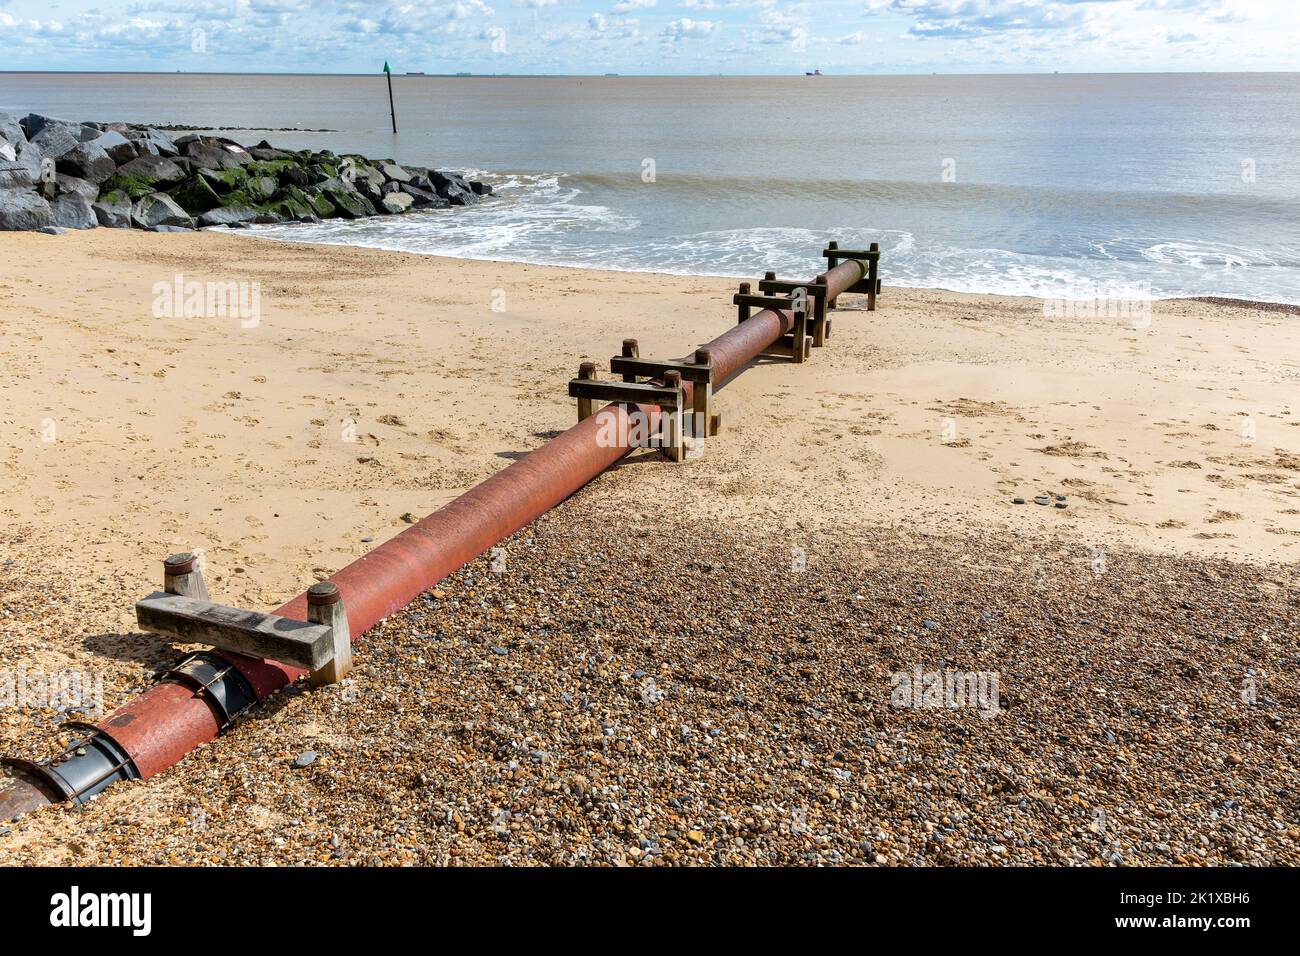 Tubo de salida de agua de Anglian en la playa de arena, Felixstowe, Suffolk, Inglaterra, Reino Unido Foto de stock